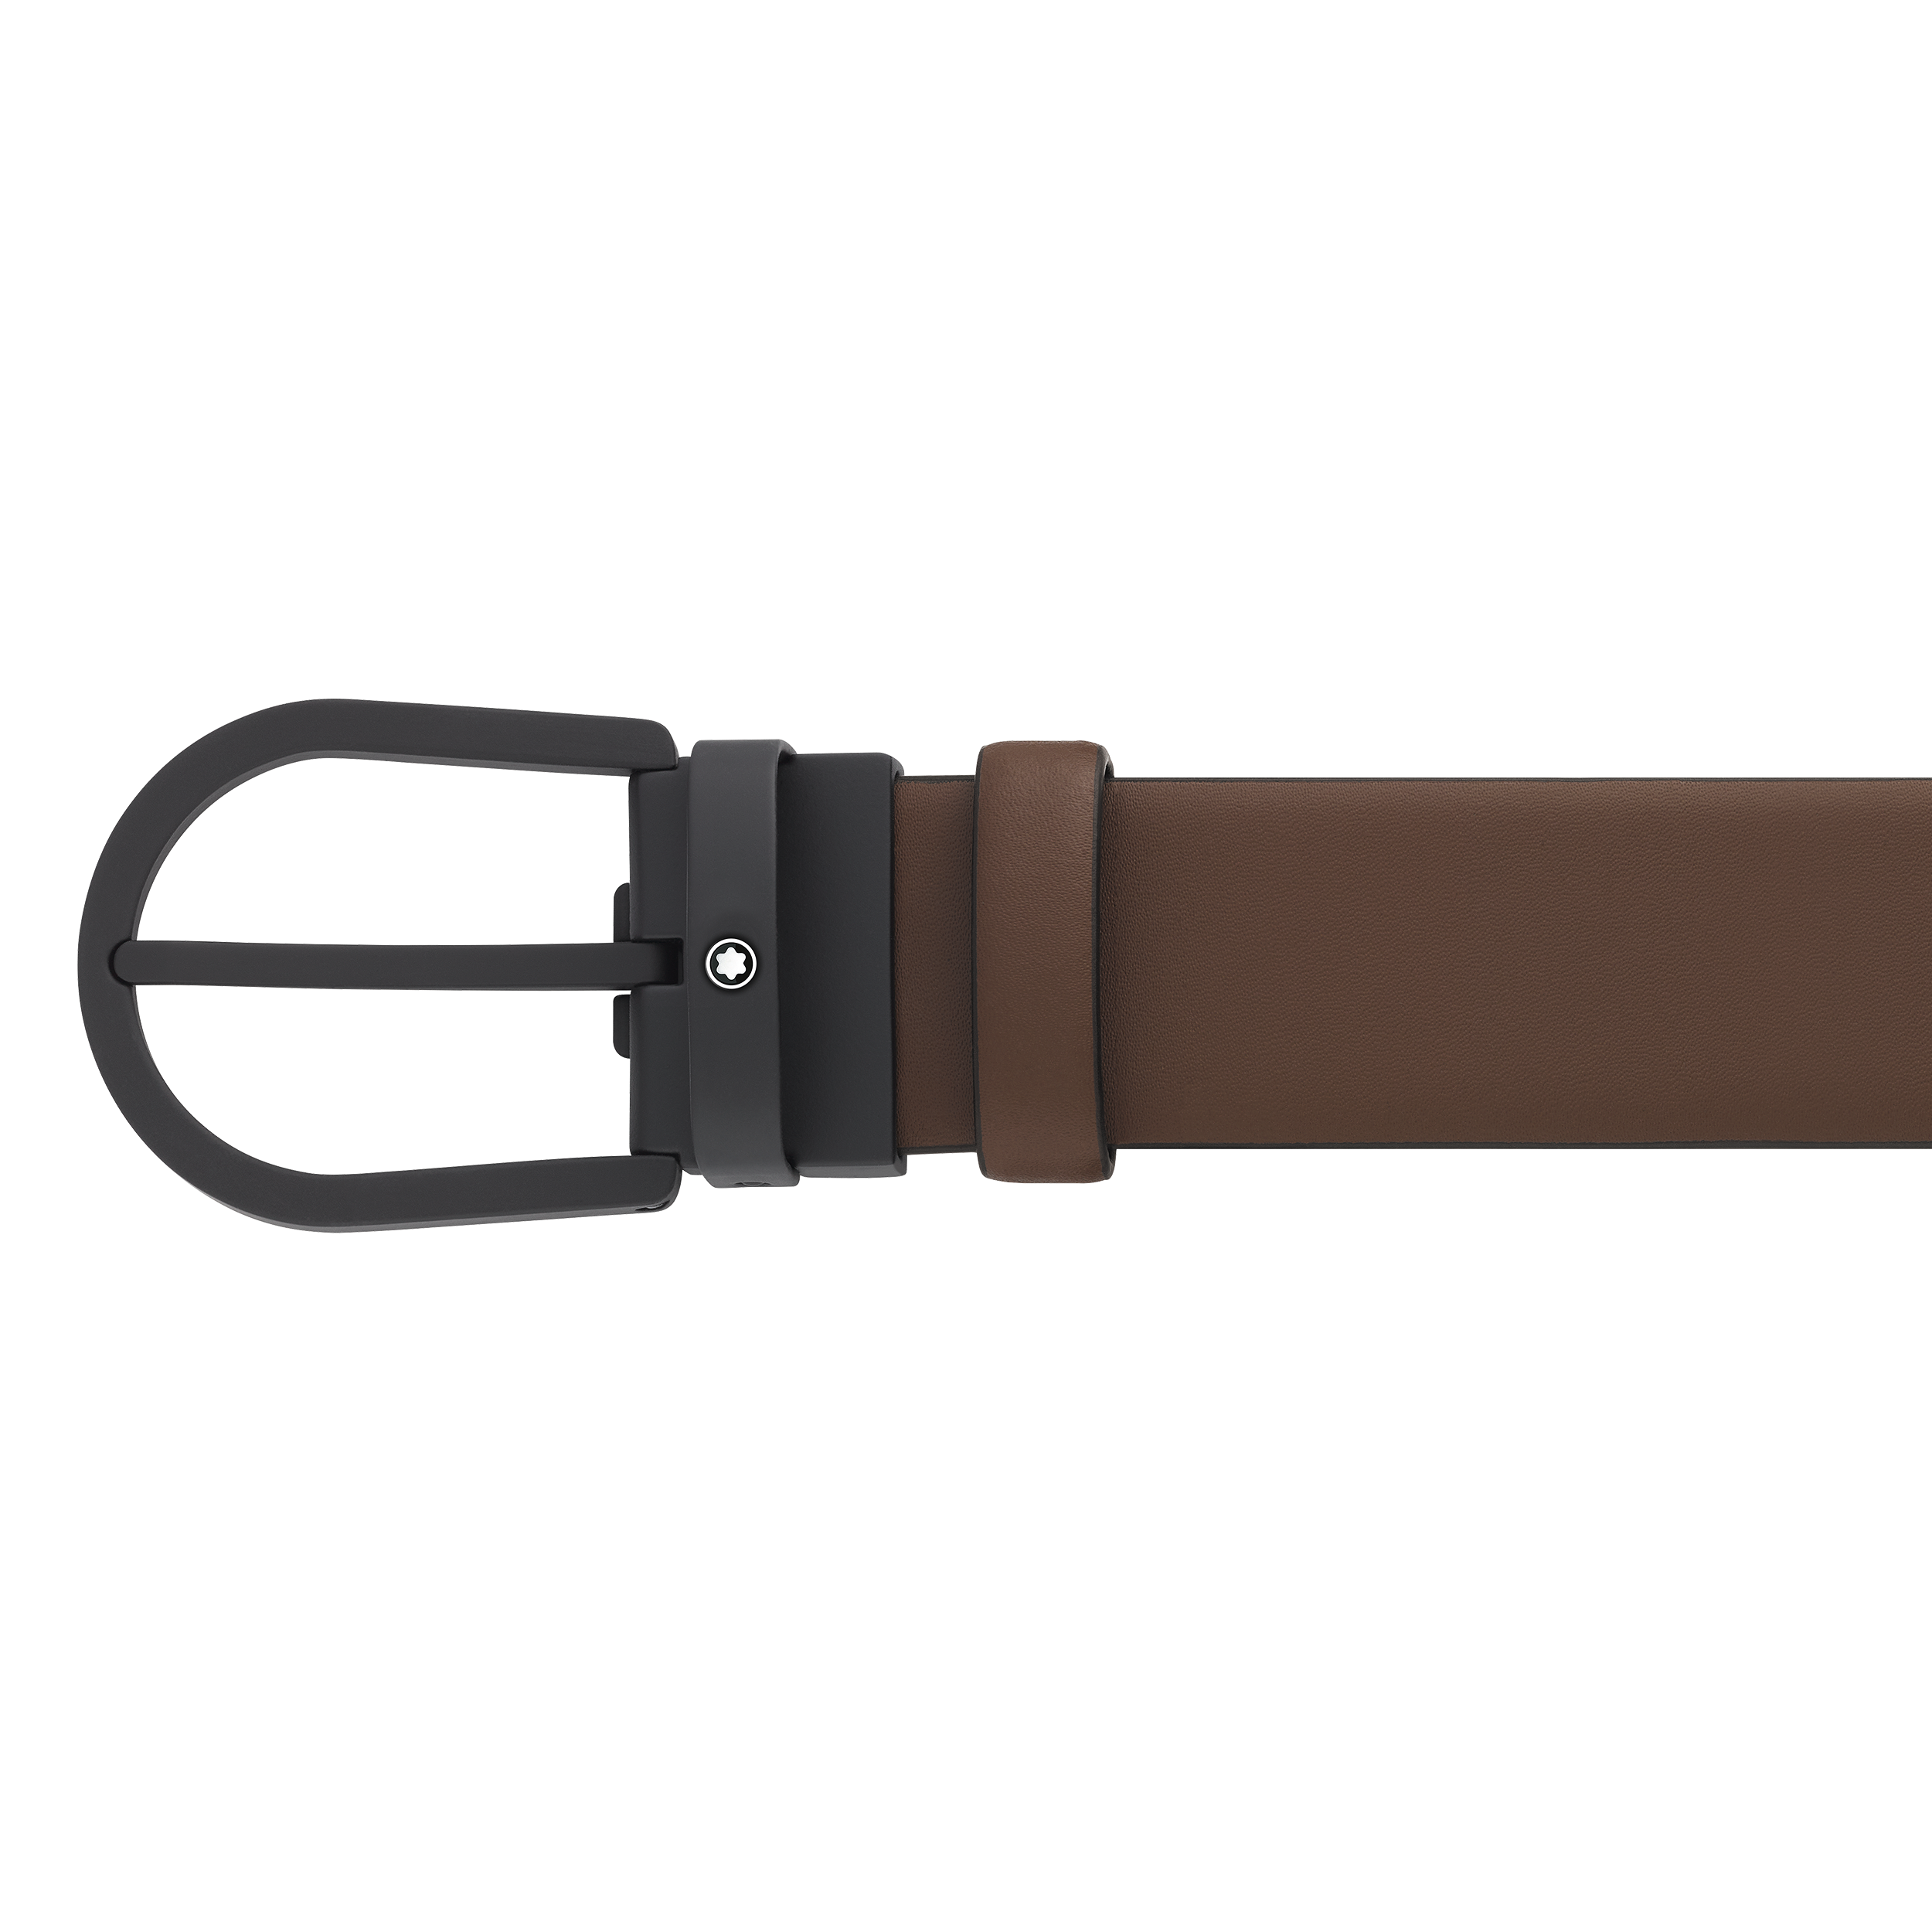 Horseshoe buckle brown 35 mm leather belt, image 3